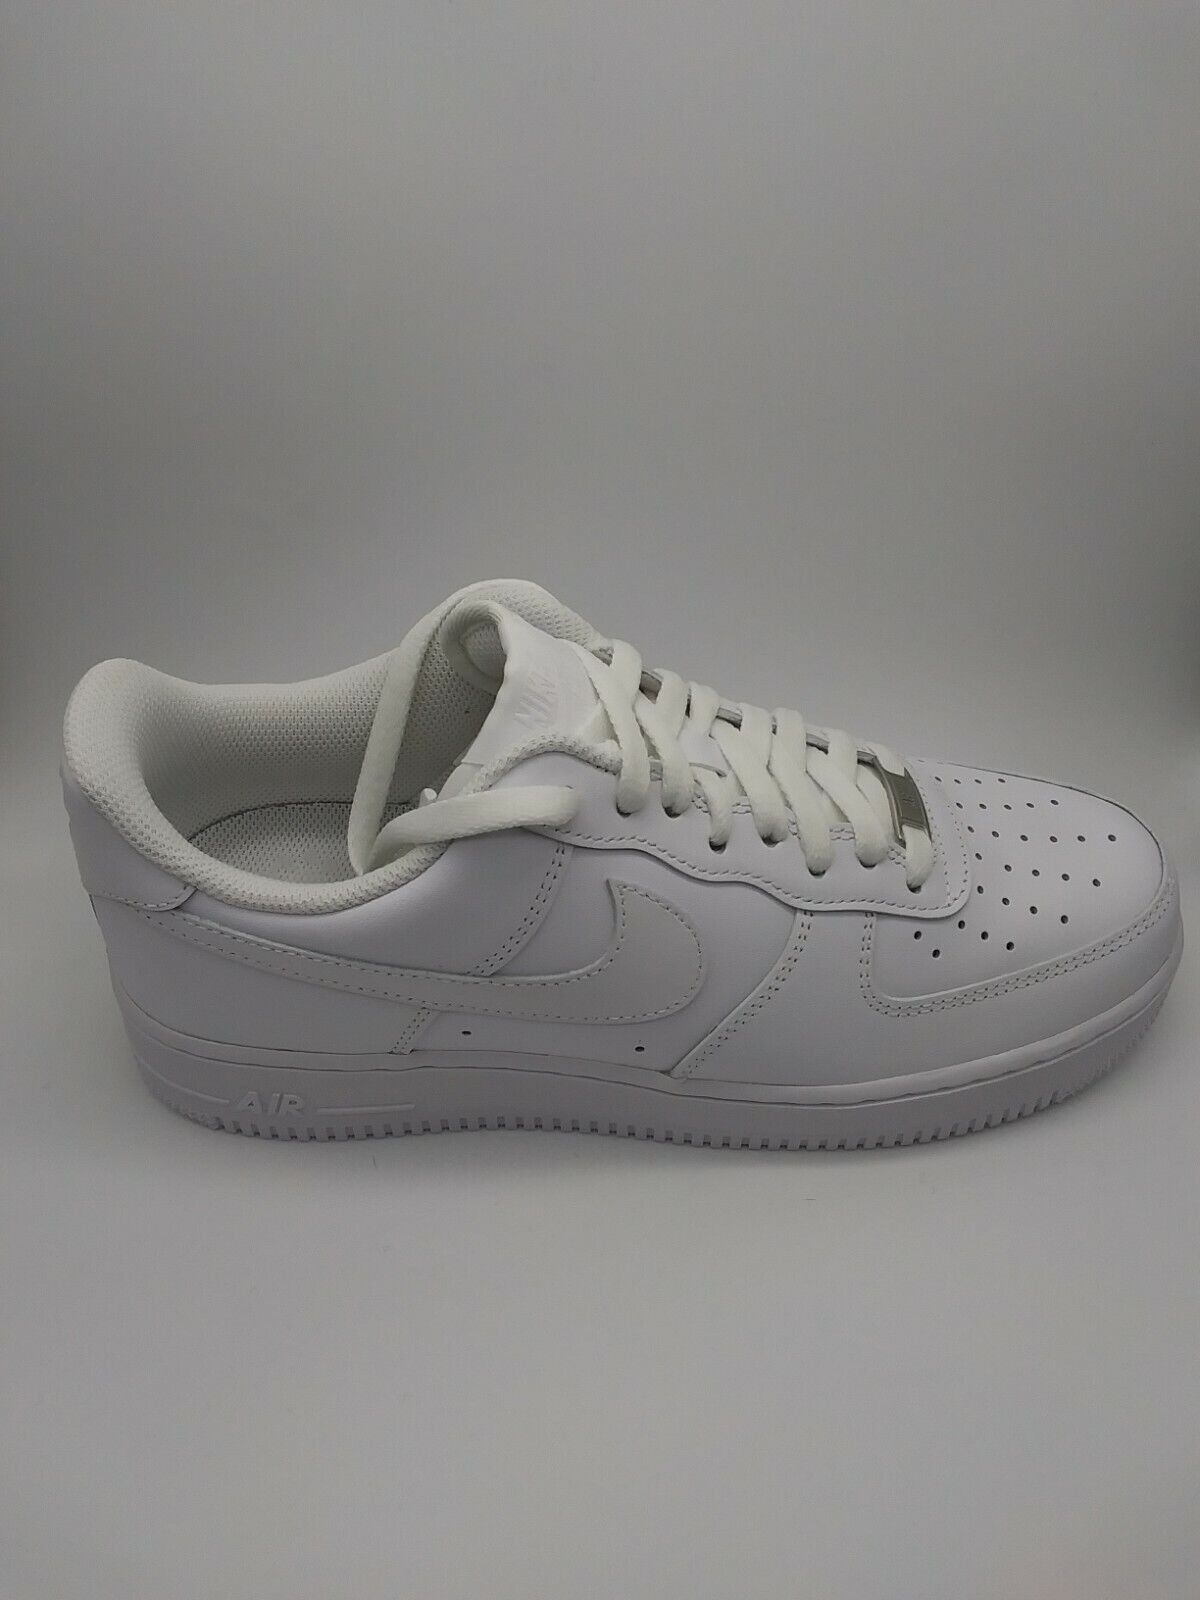 Nike Air Force 1 07 Men's Women Low Triple White Casual CW2288-111 Shoes Sneaker